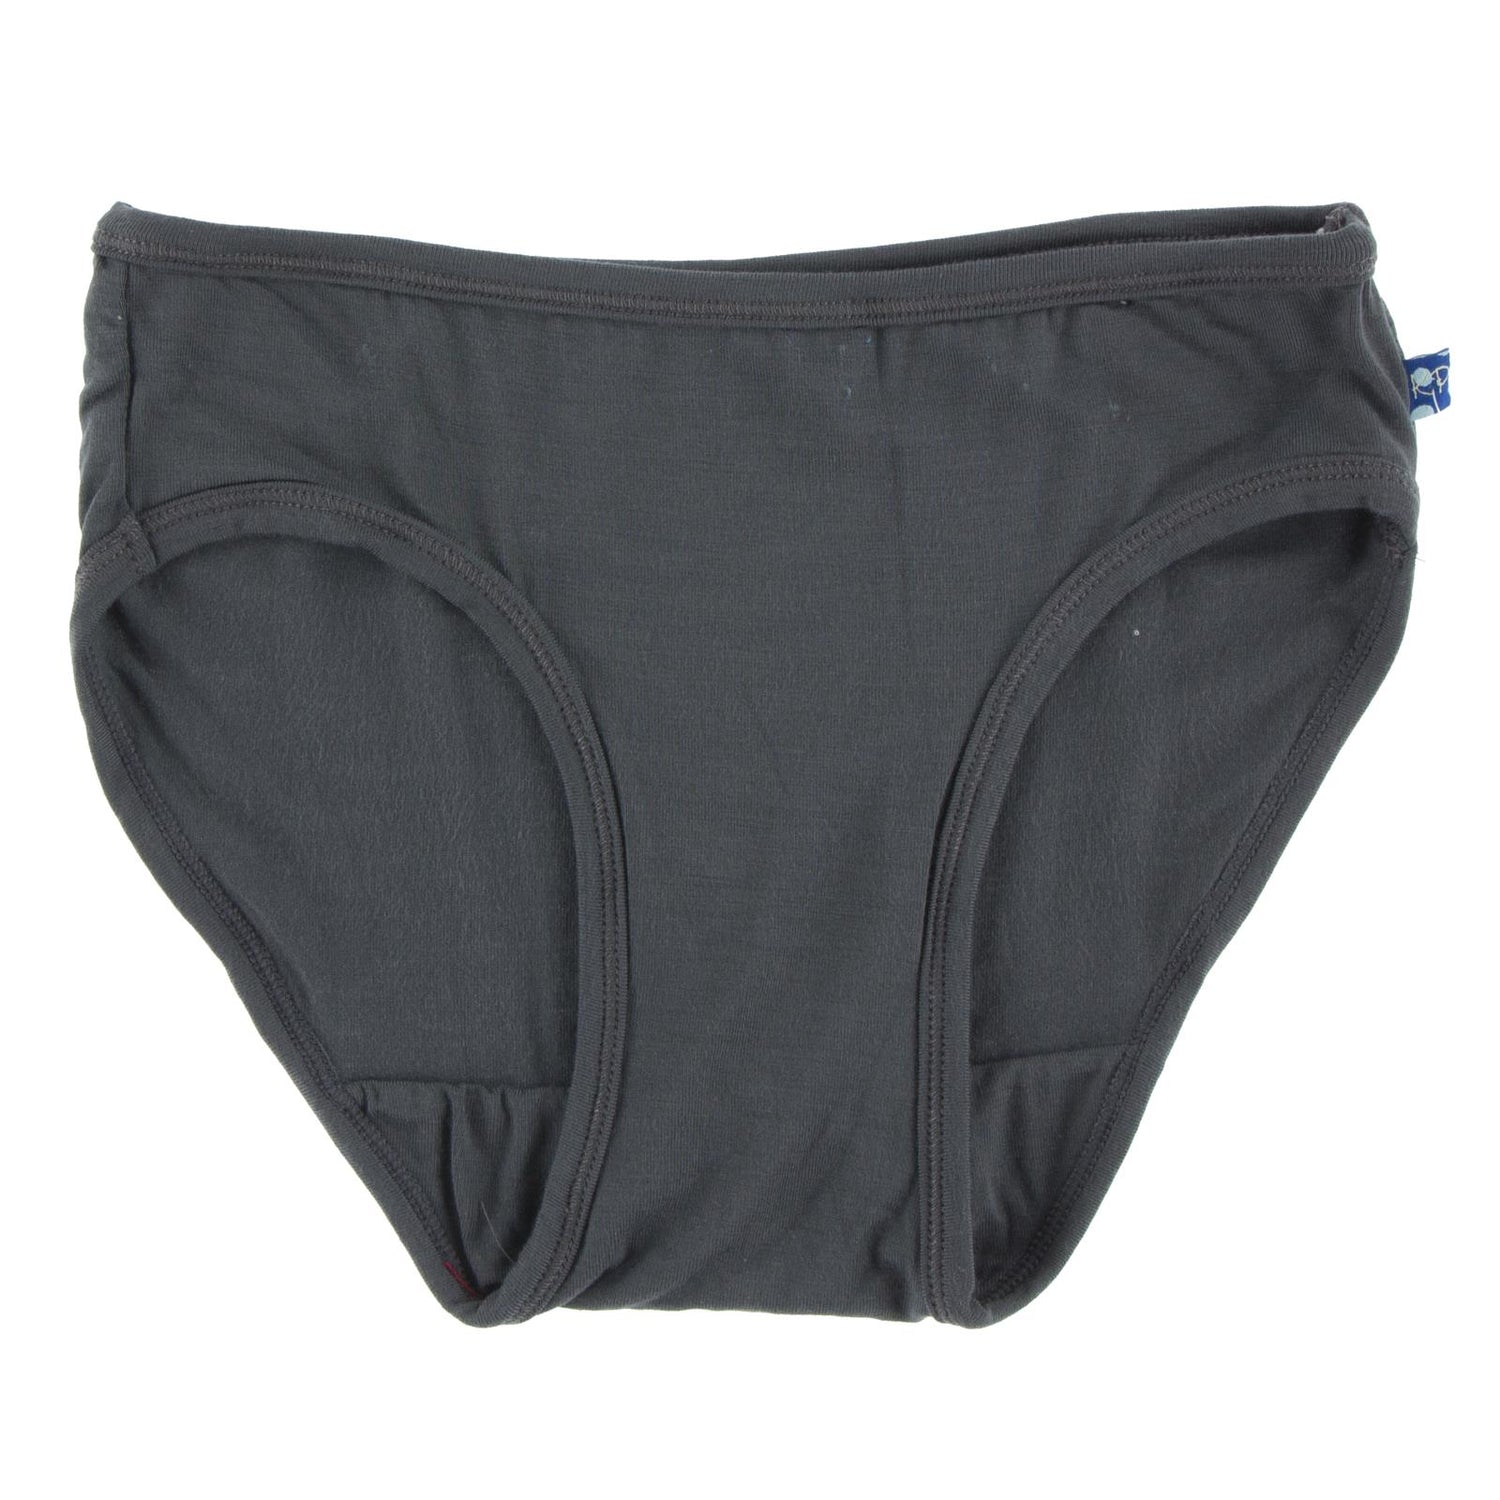  KicKee Pants Training Pants Underwear Set, Soft